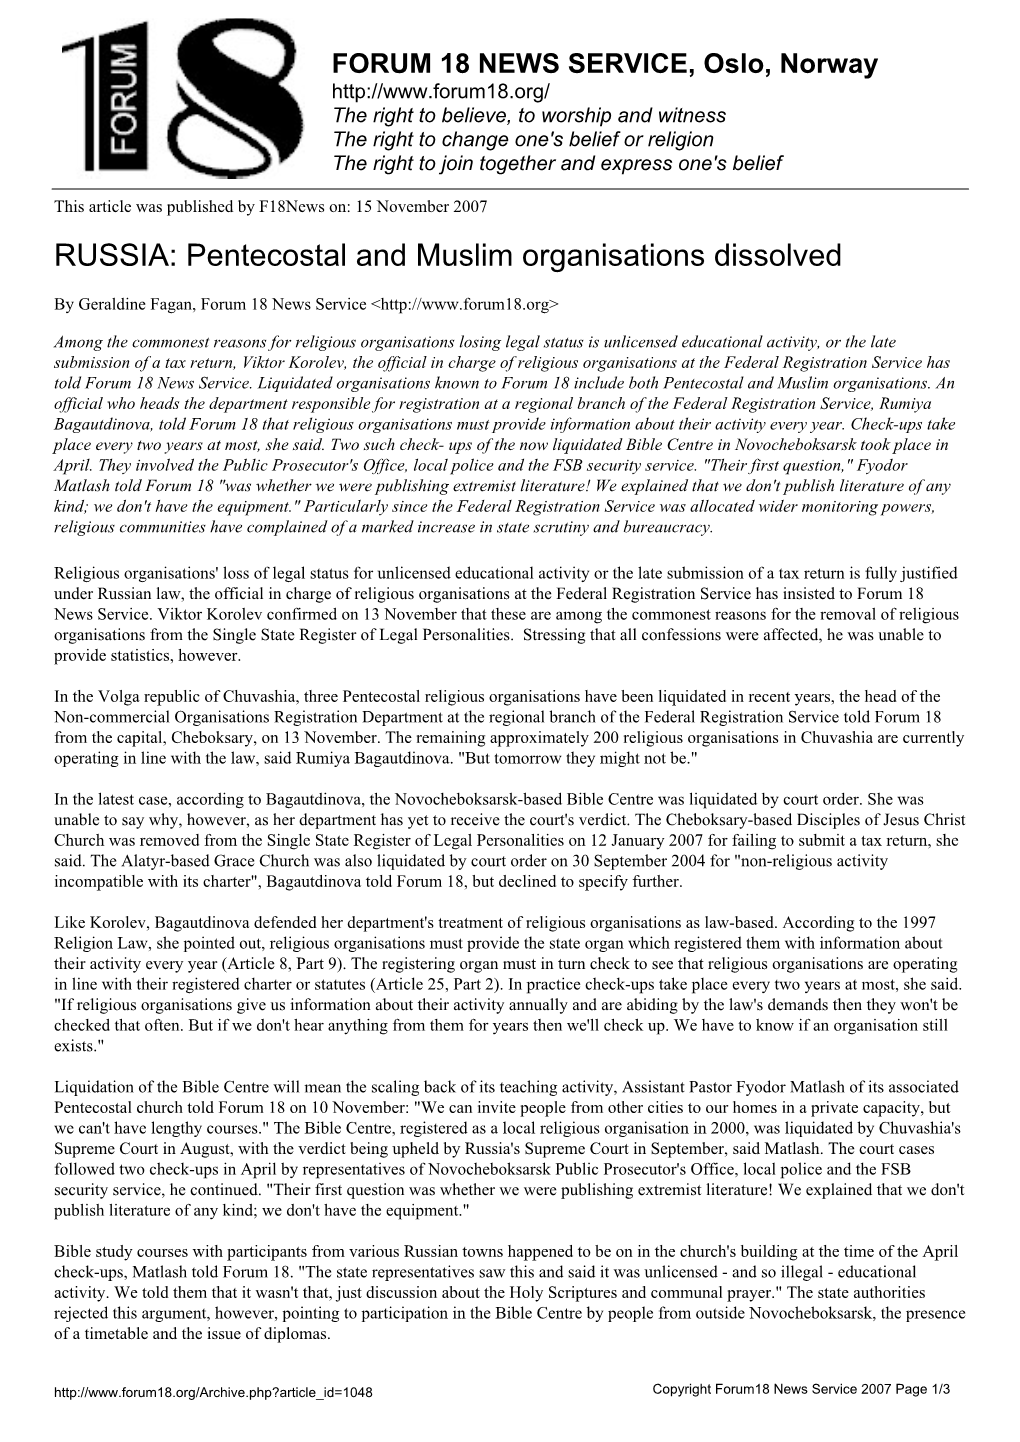 RUSSIA: Pentecostal and Muslim Organisations Dissolved